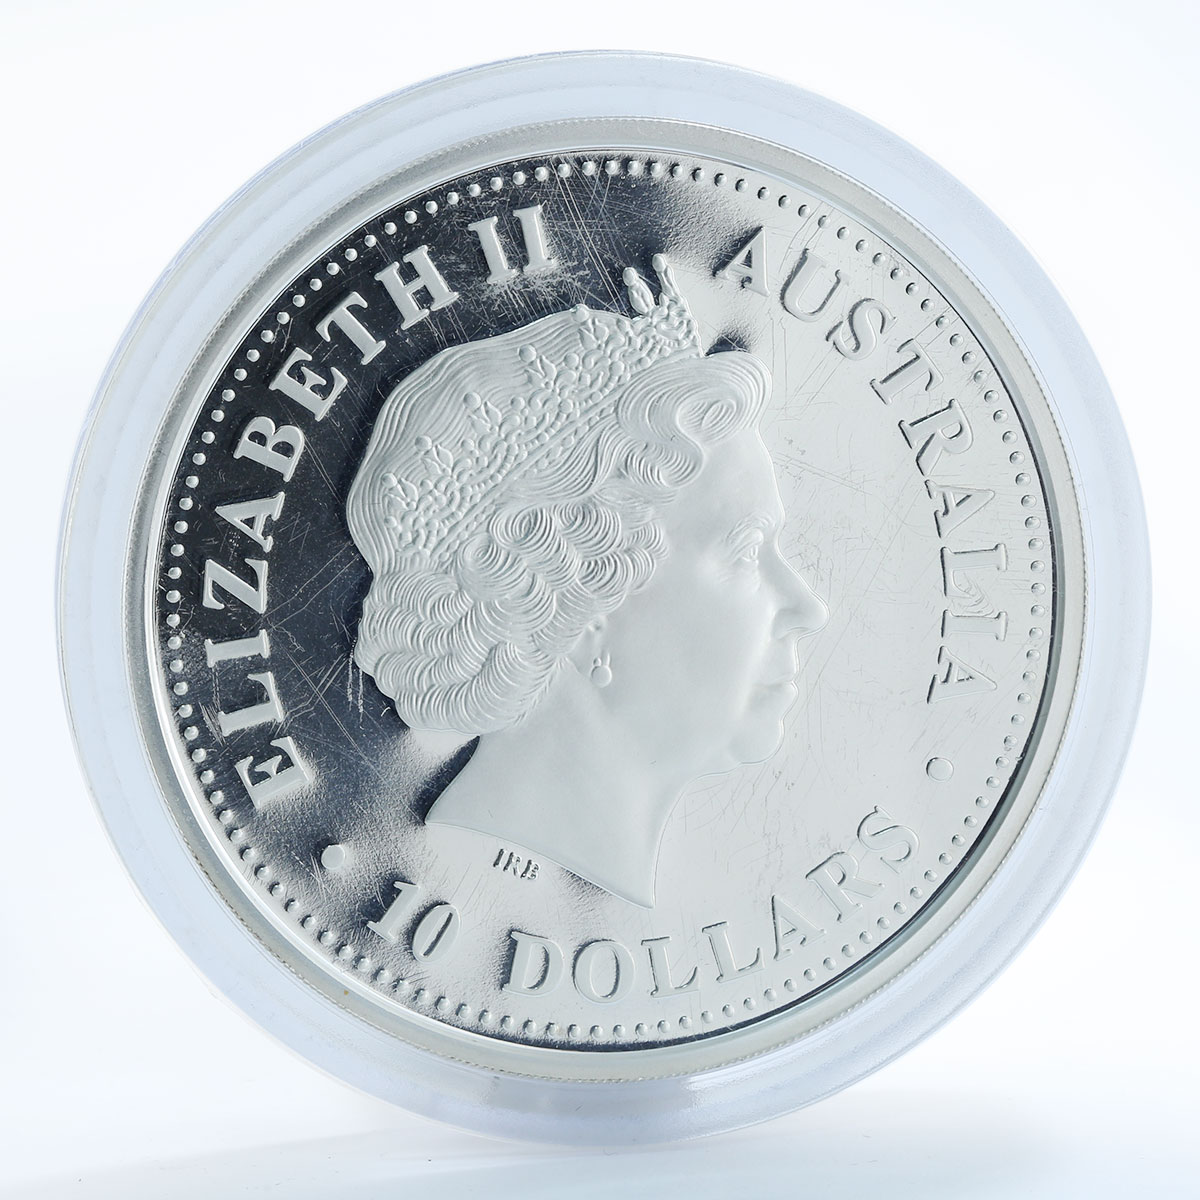 Australia 10 dollars Kookaburra Evolution of the Alphabet silver proof coin 2003